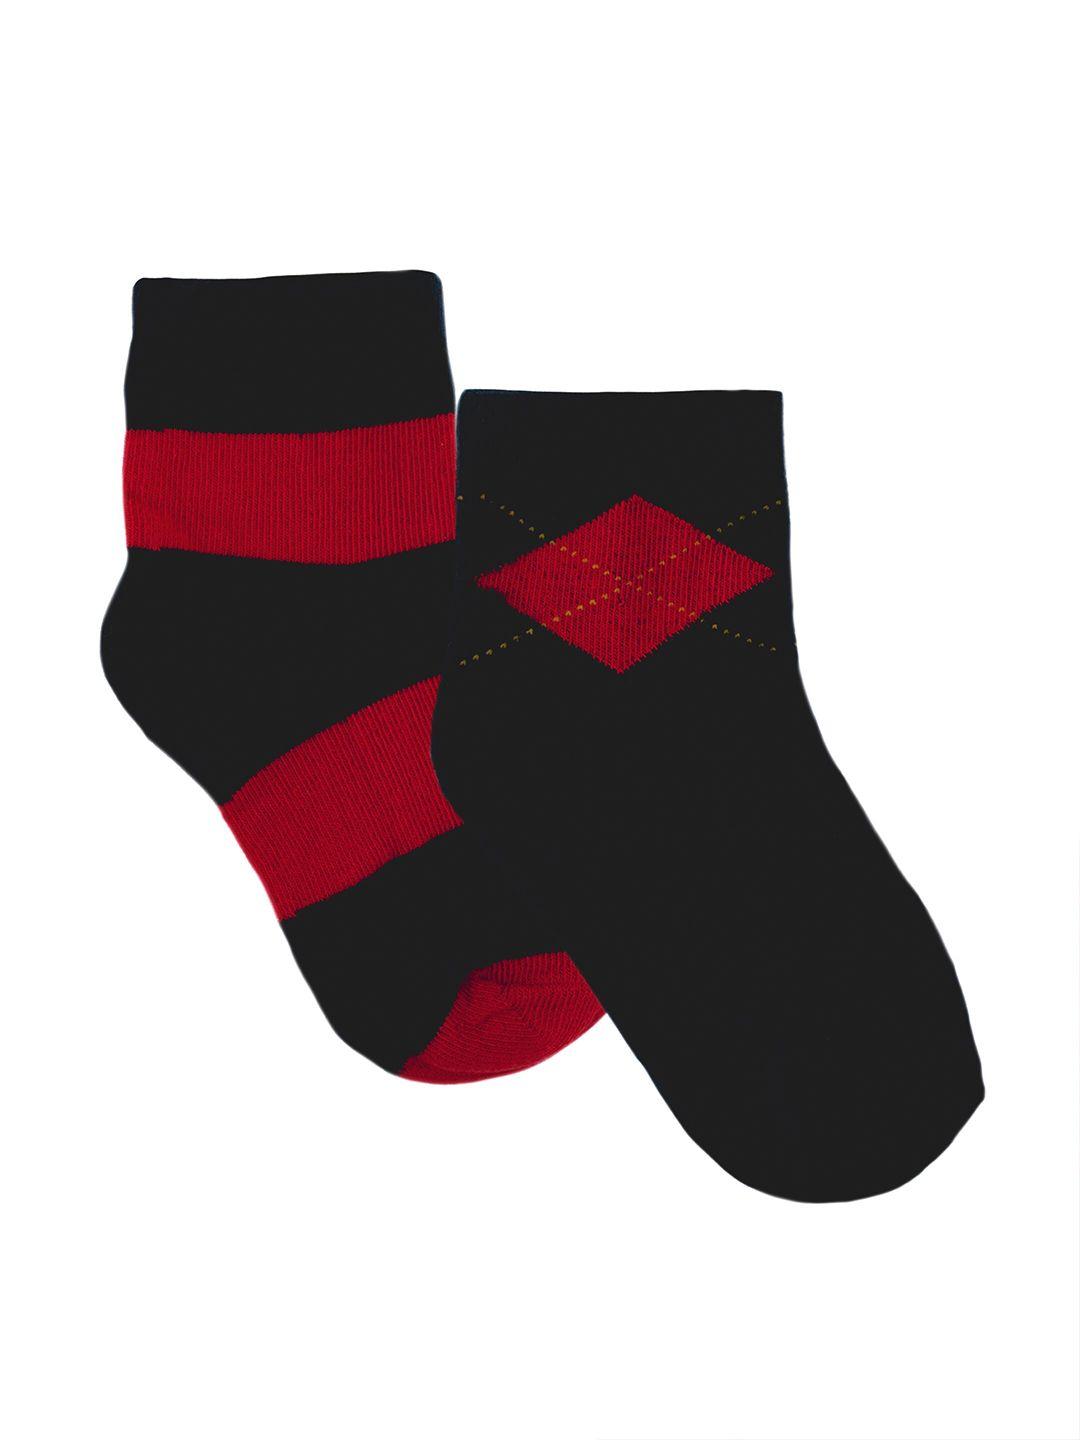 nuluv-boys-pack-of-2-assorted-socks